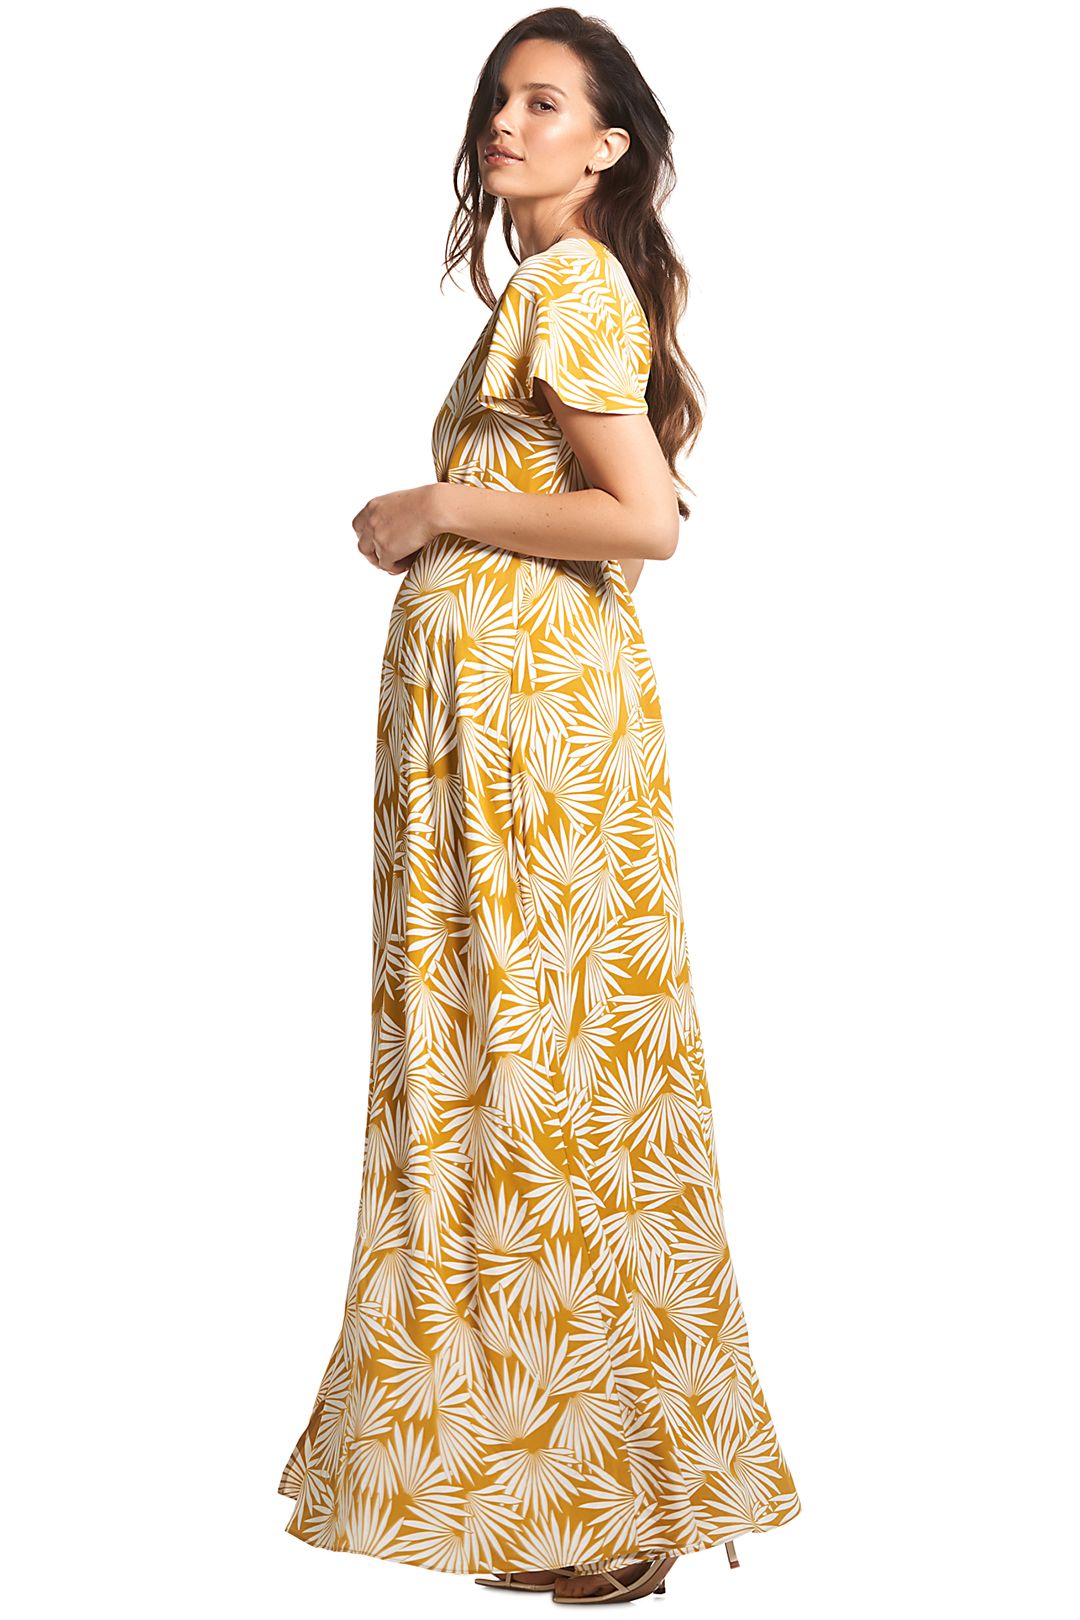 Soon-Maternity-Elizabeth-Maxi-Dress-Yellow-Sun-Print-Side